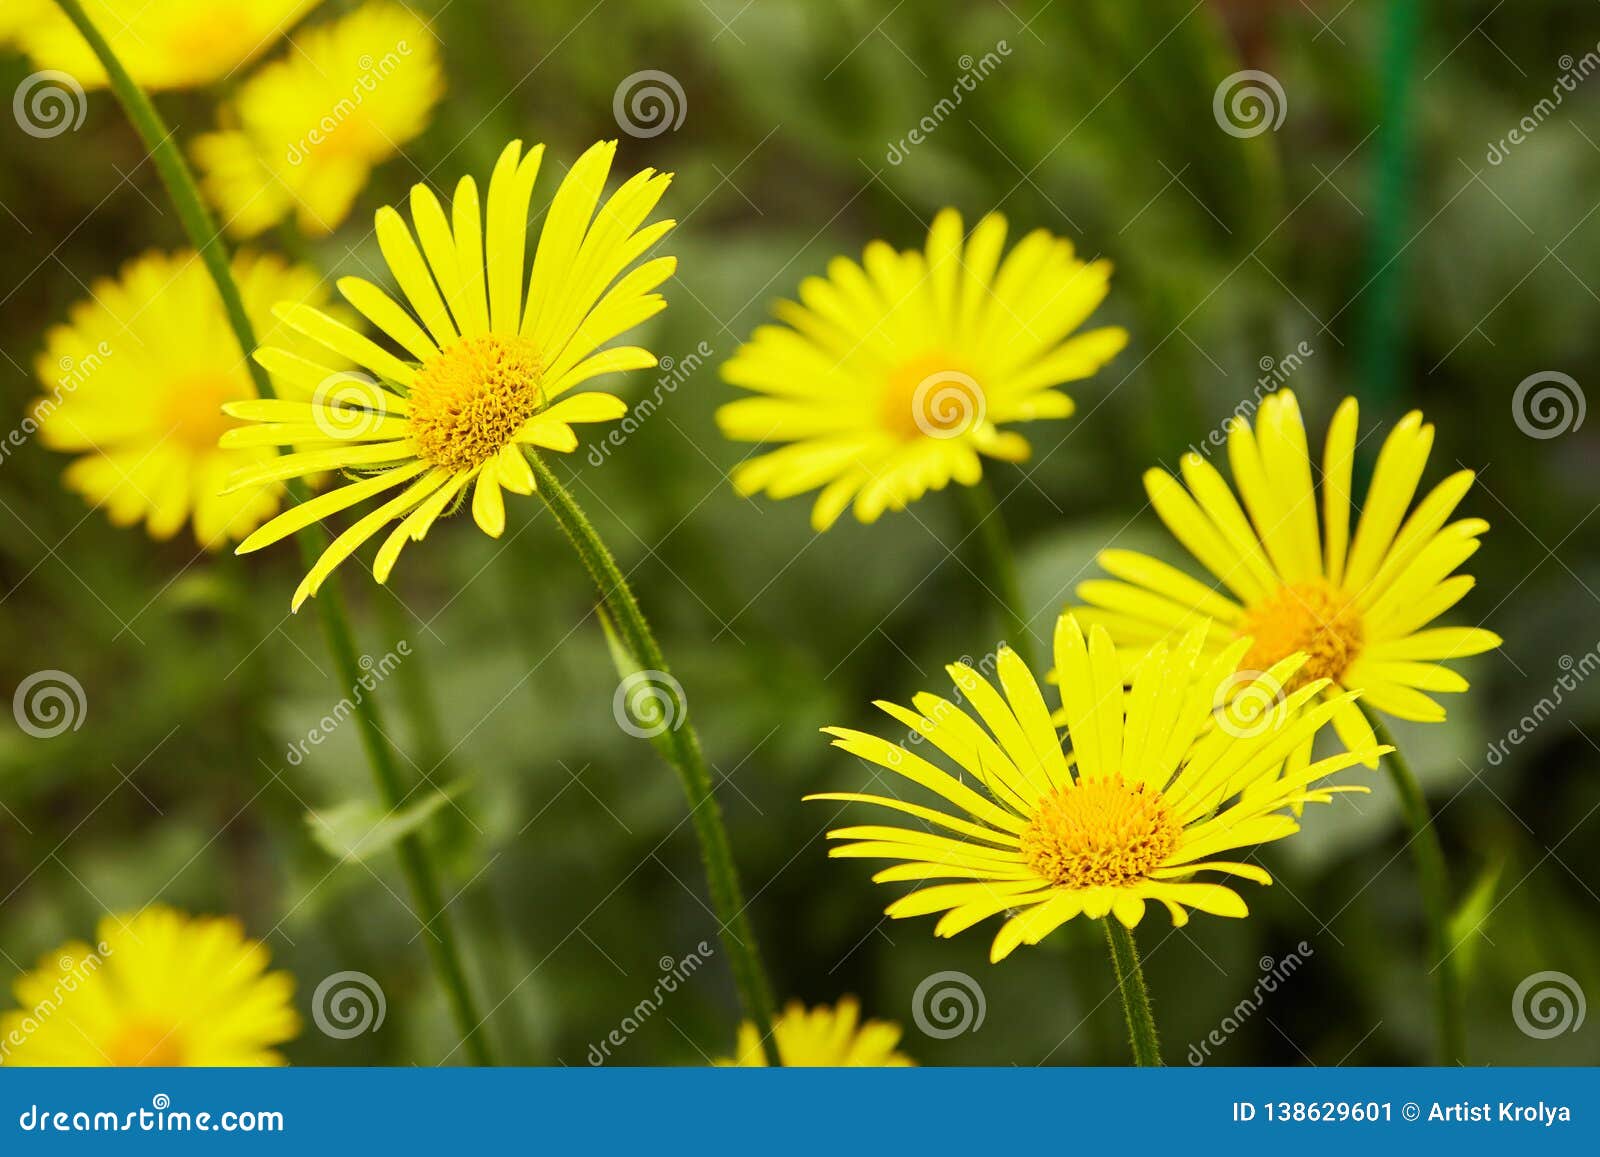 euryops pectinatus. yellow flower blooming